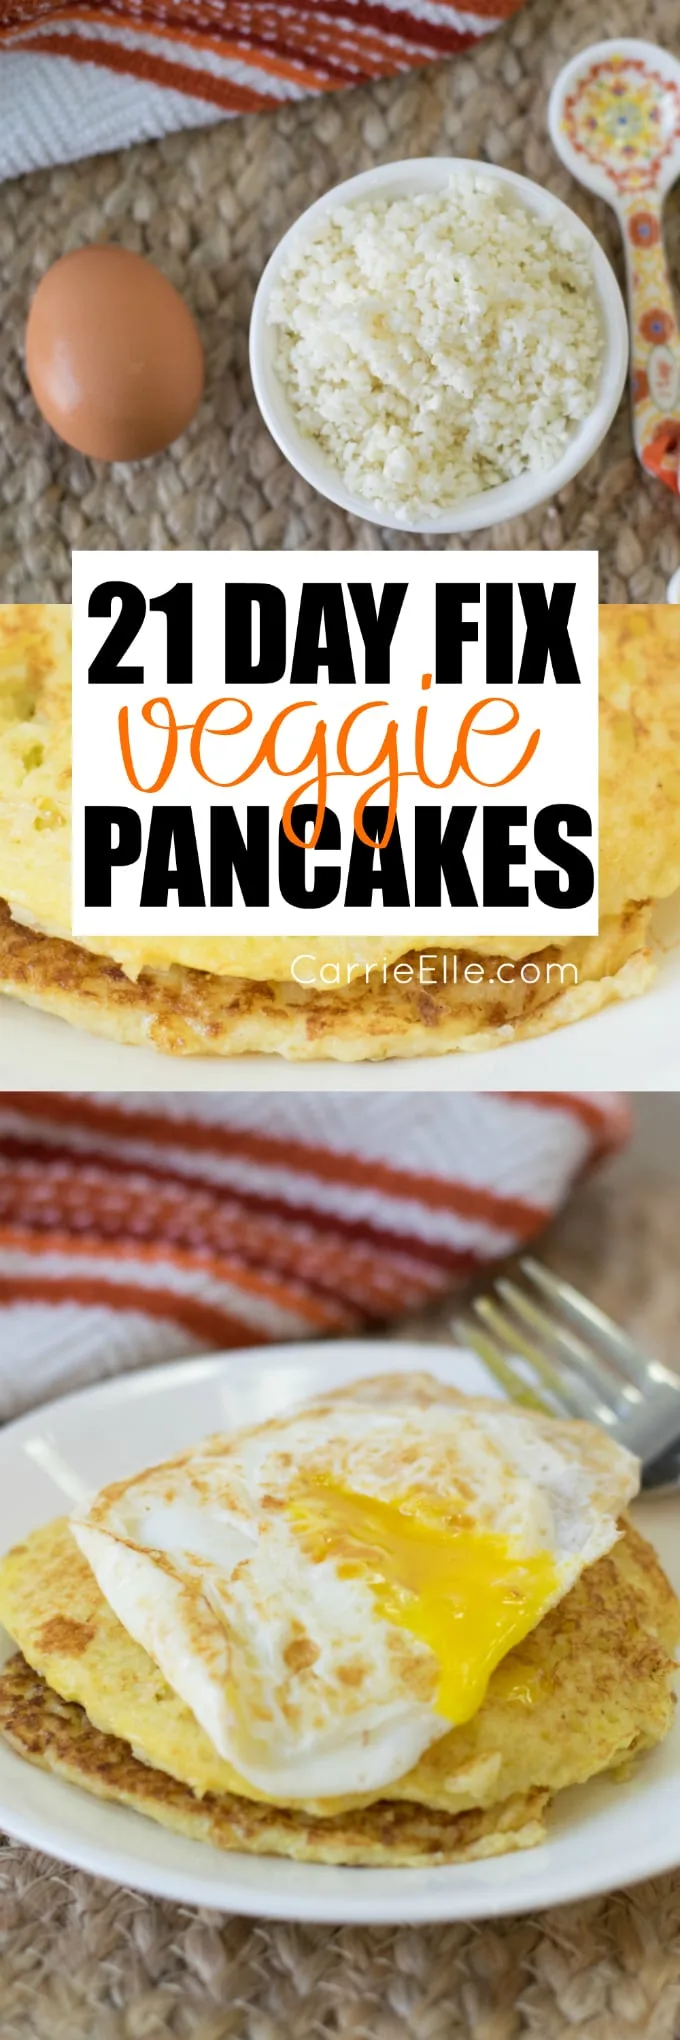 21 Day Fix Veggie Pancakes